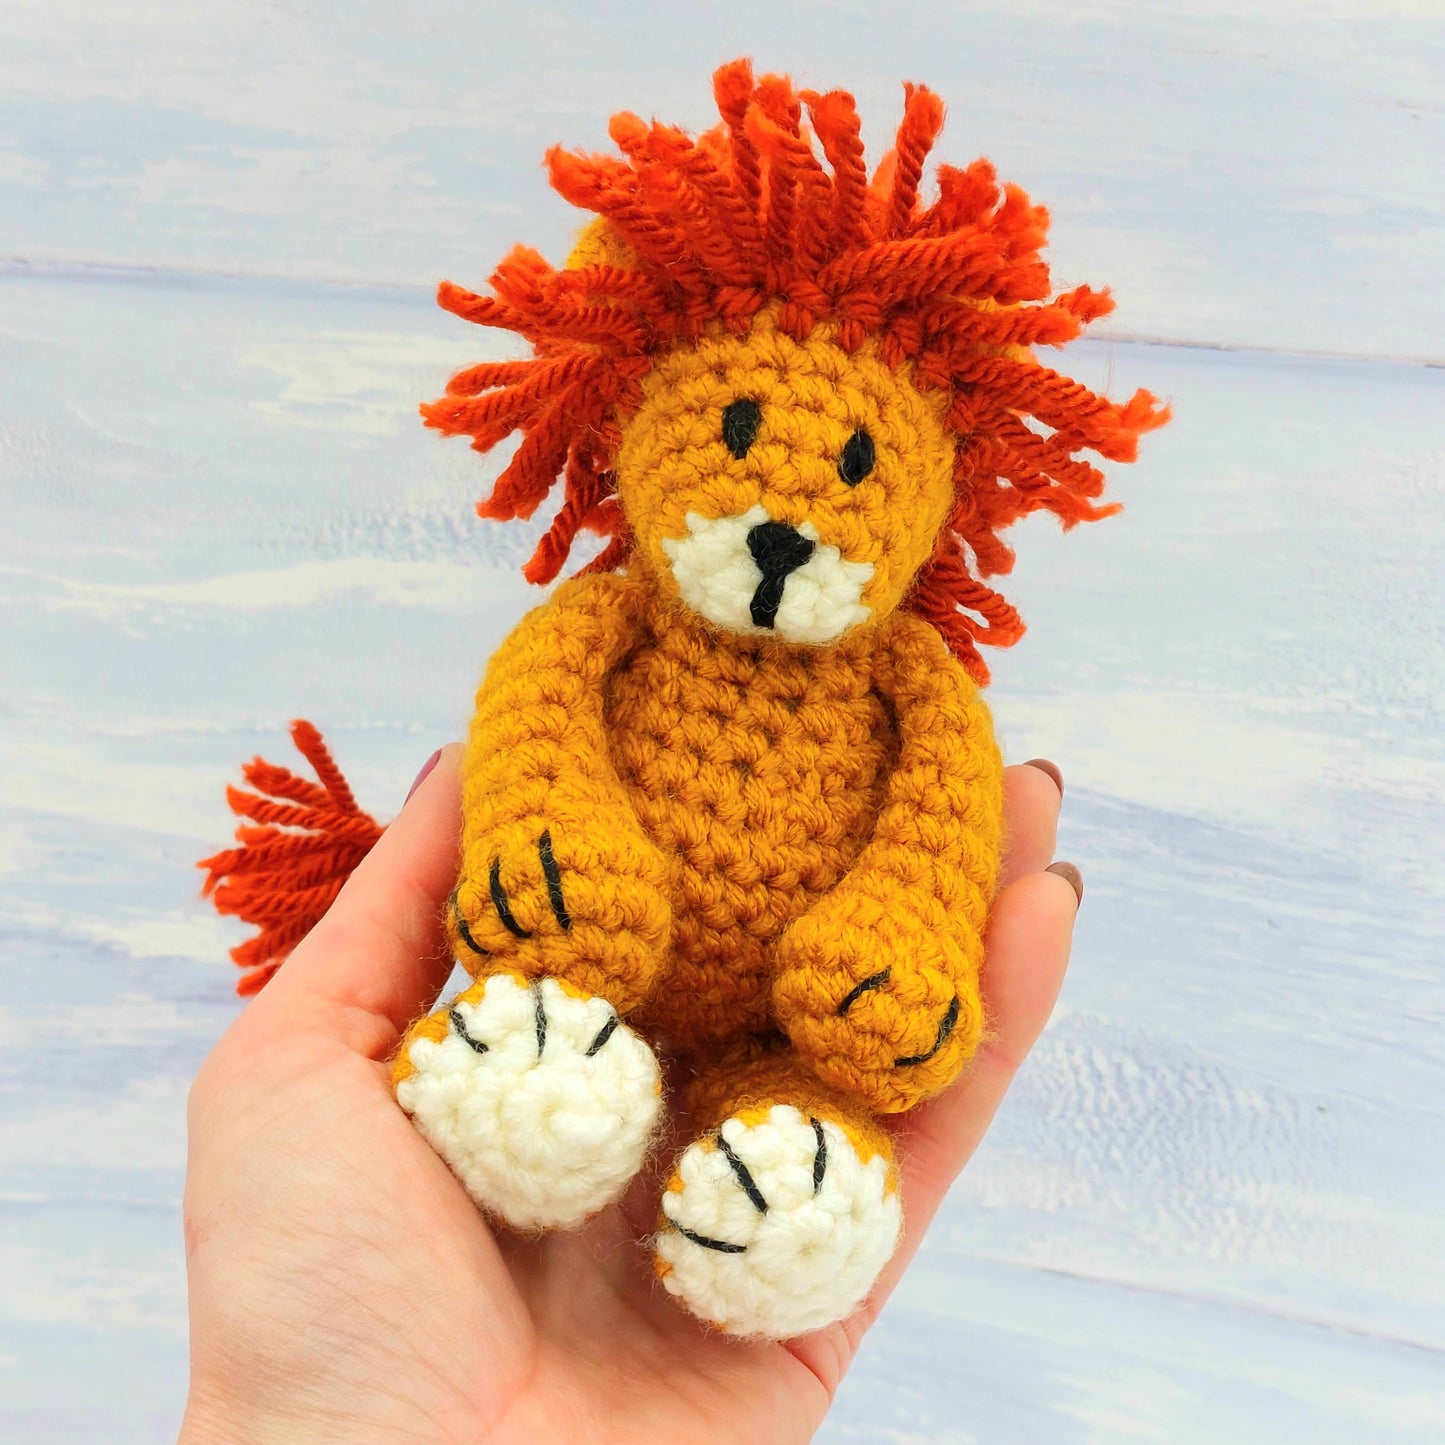 Baby Lion Mini Crochet Kit